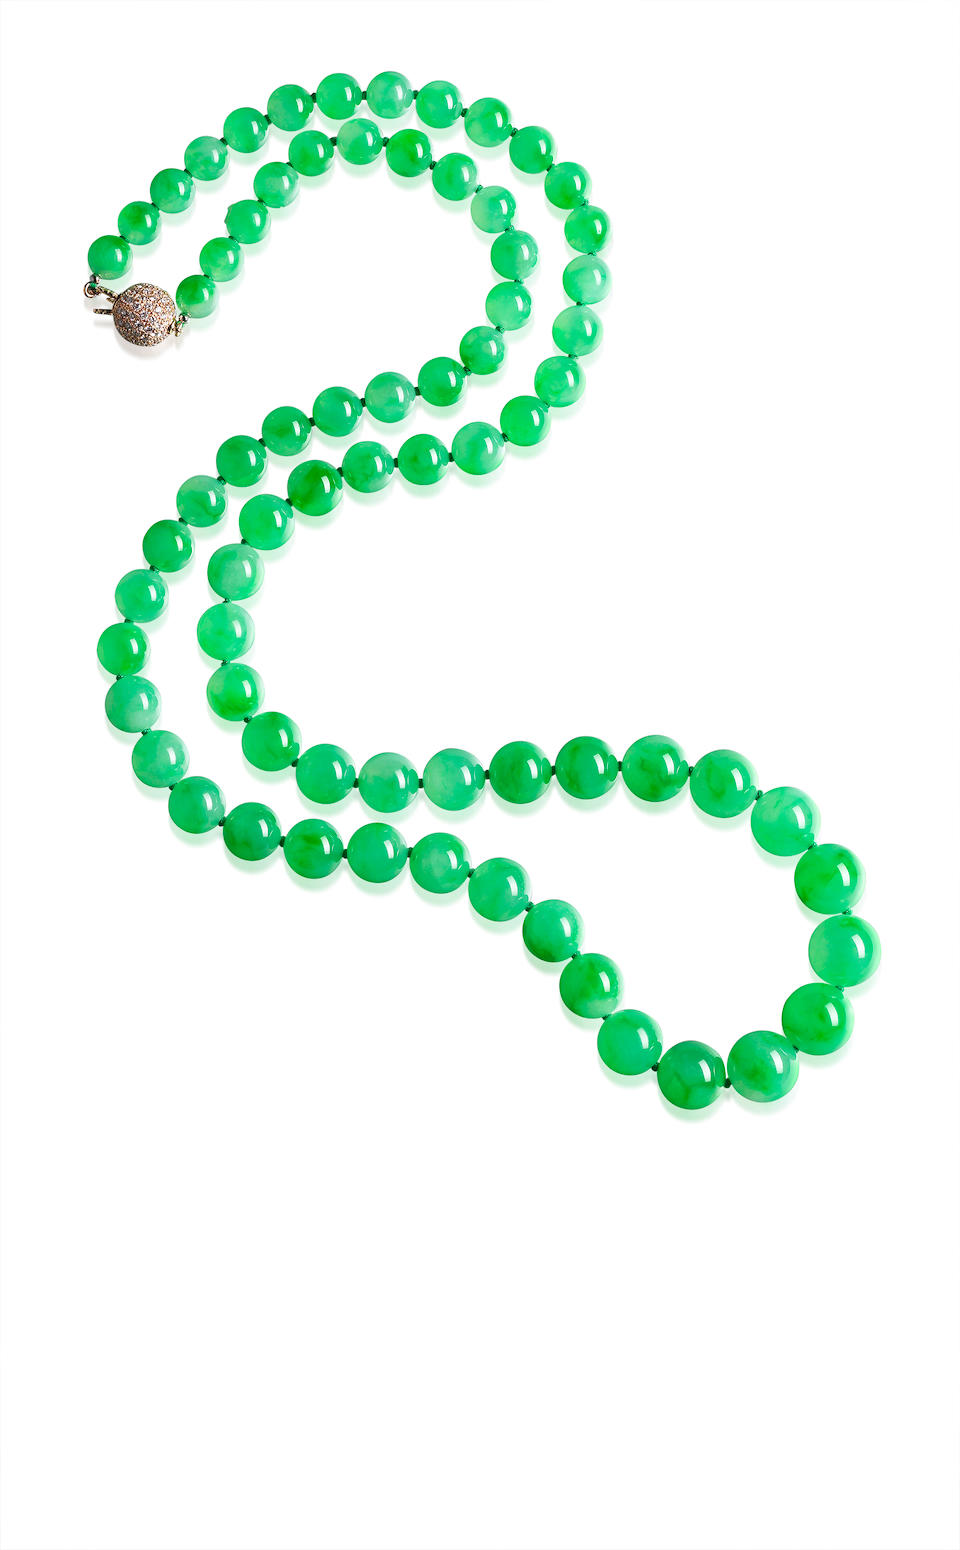 Bonhams : An Important Jadeite Bead Necklace